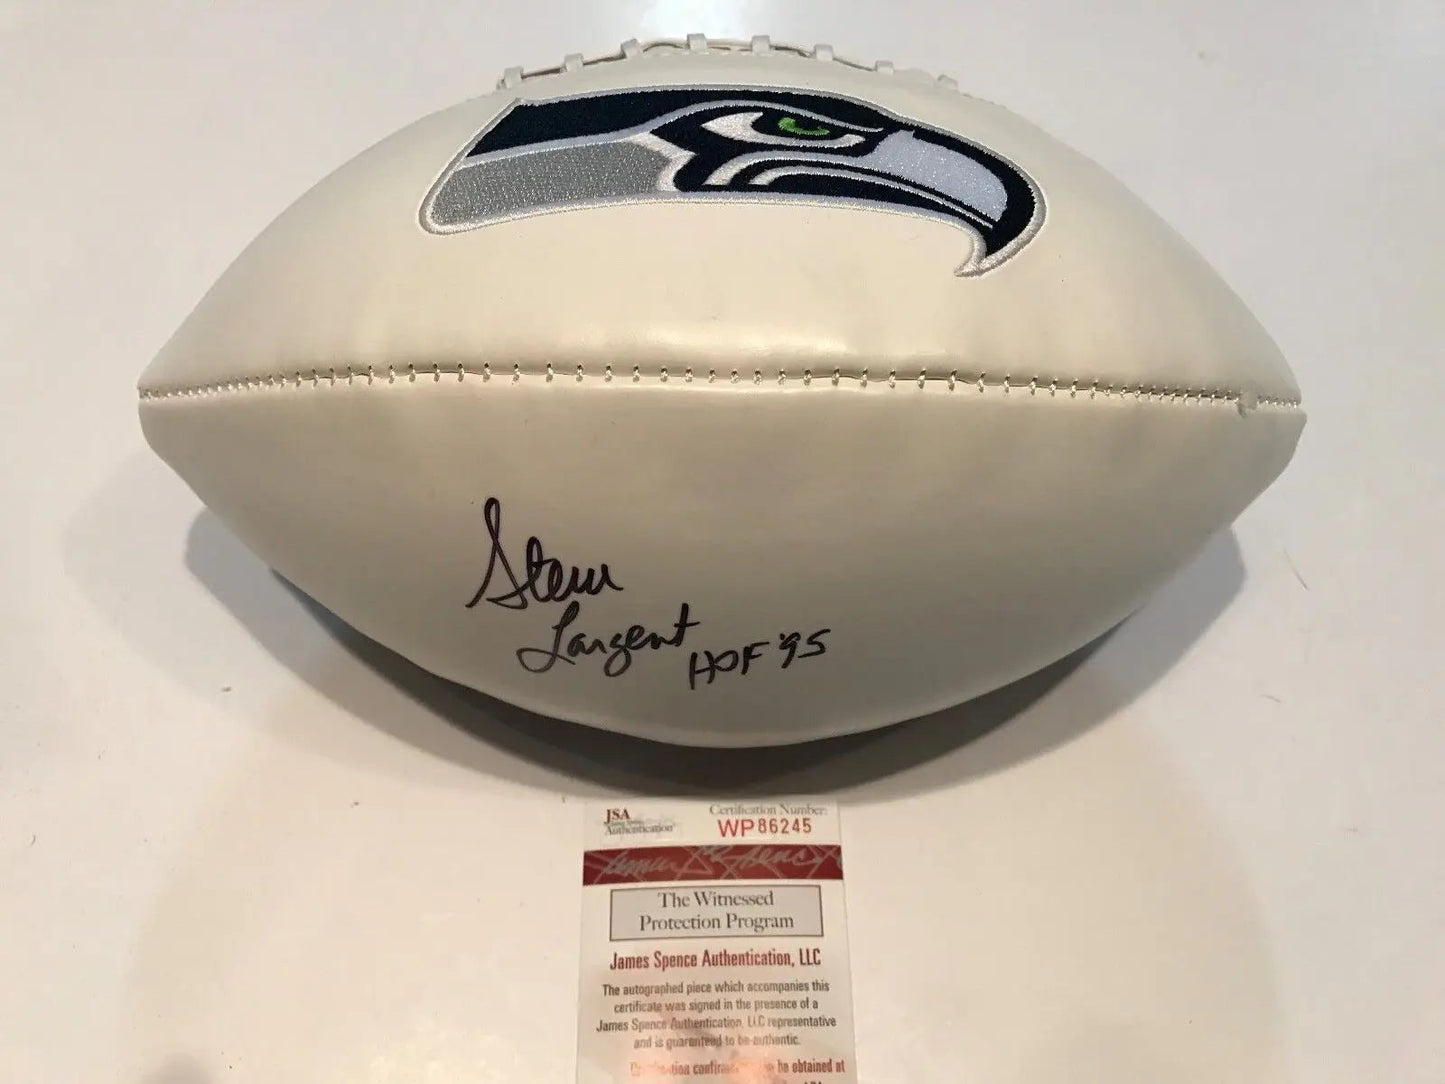 MVP Authentics Steve Largent Autographed Signed Inscribe Seattle Seahawks Logo Football Jsa Coa 117 sports jersey framing , jersey framing